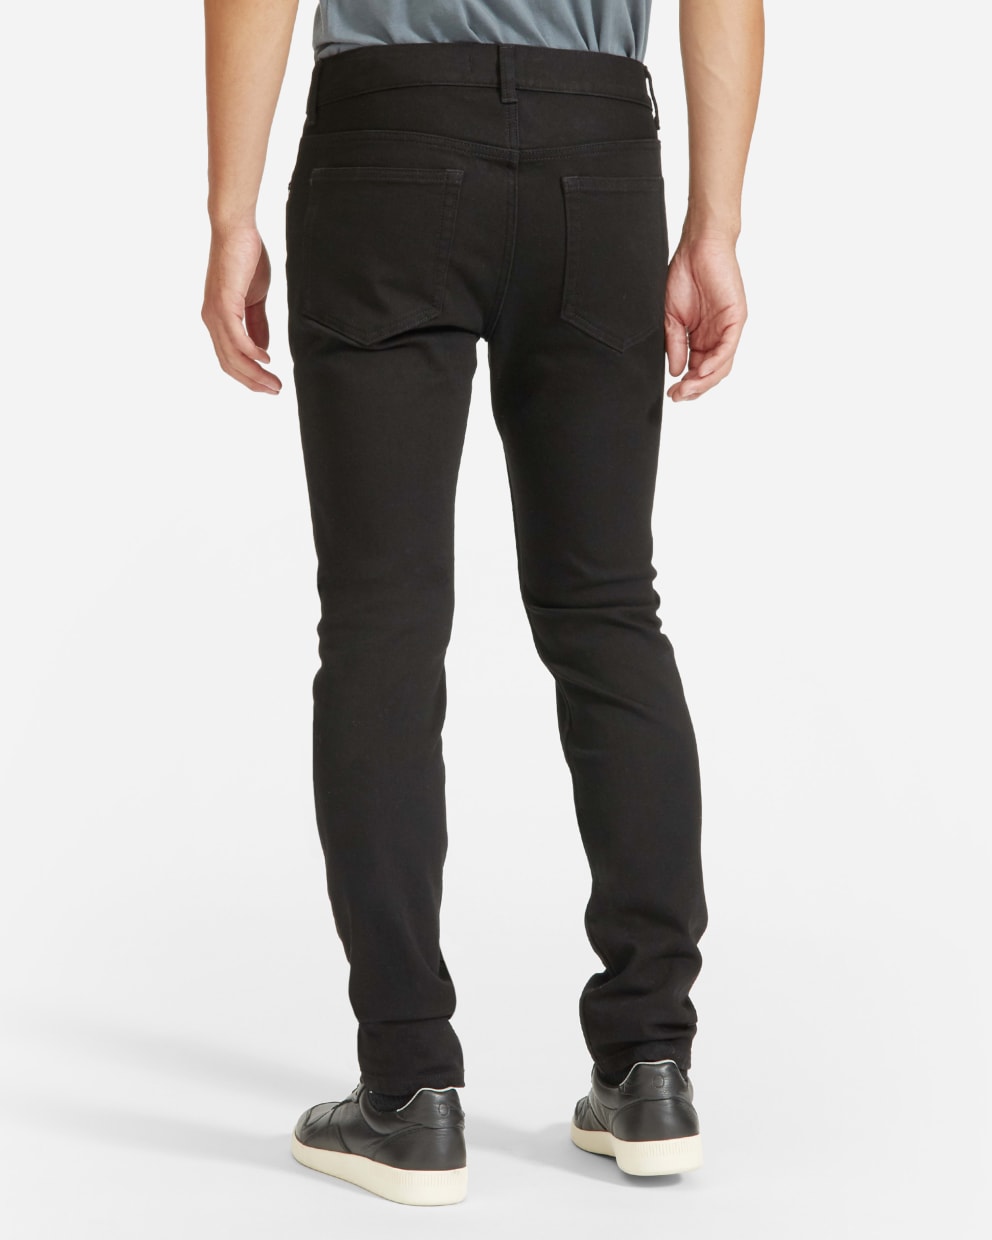 Black Denim Jeans Pants For Men With Rivet Studs And Distressed Detailing  For Men From Bigget, $27.33 | DHgate.Com